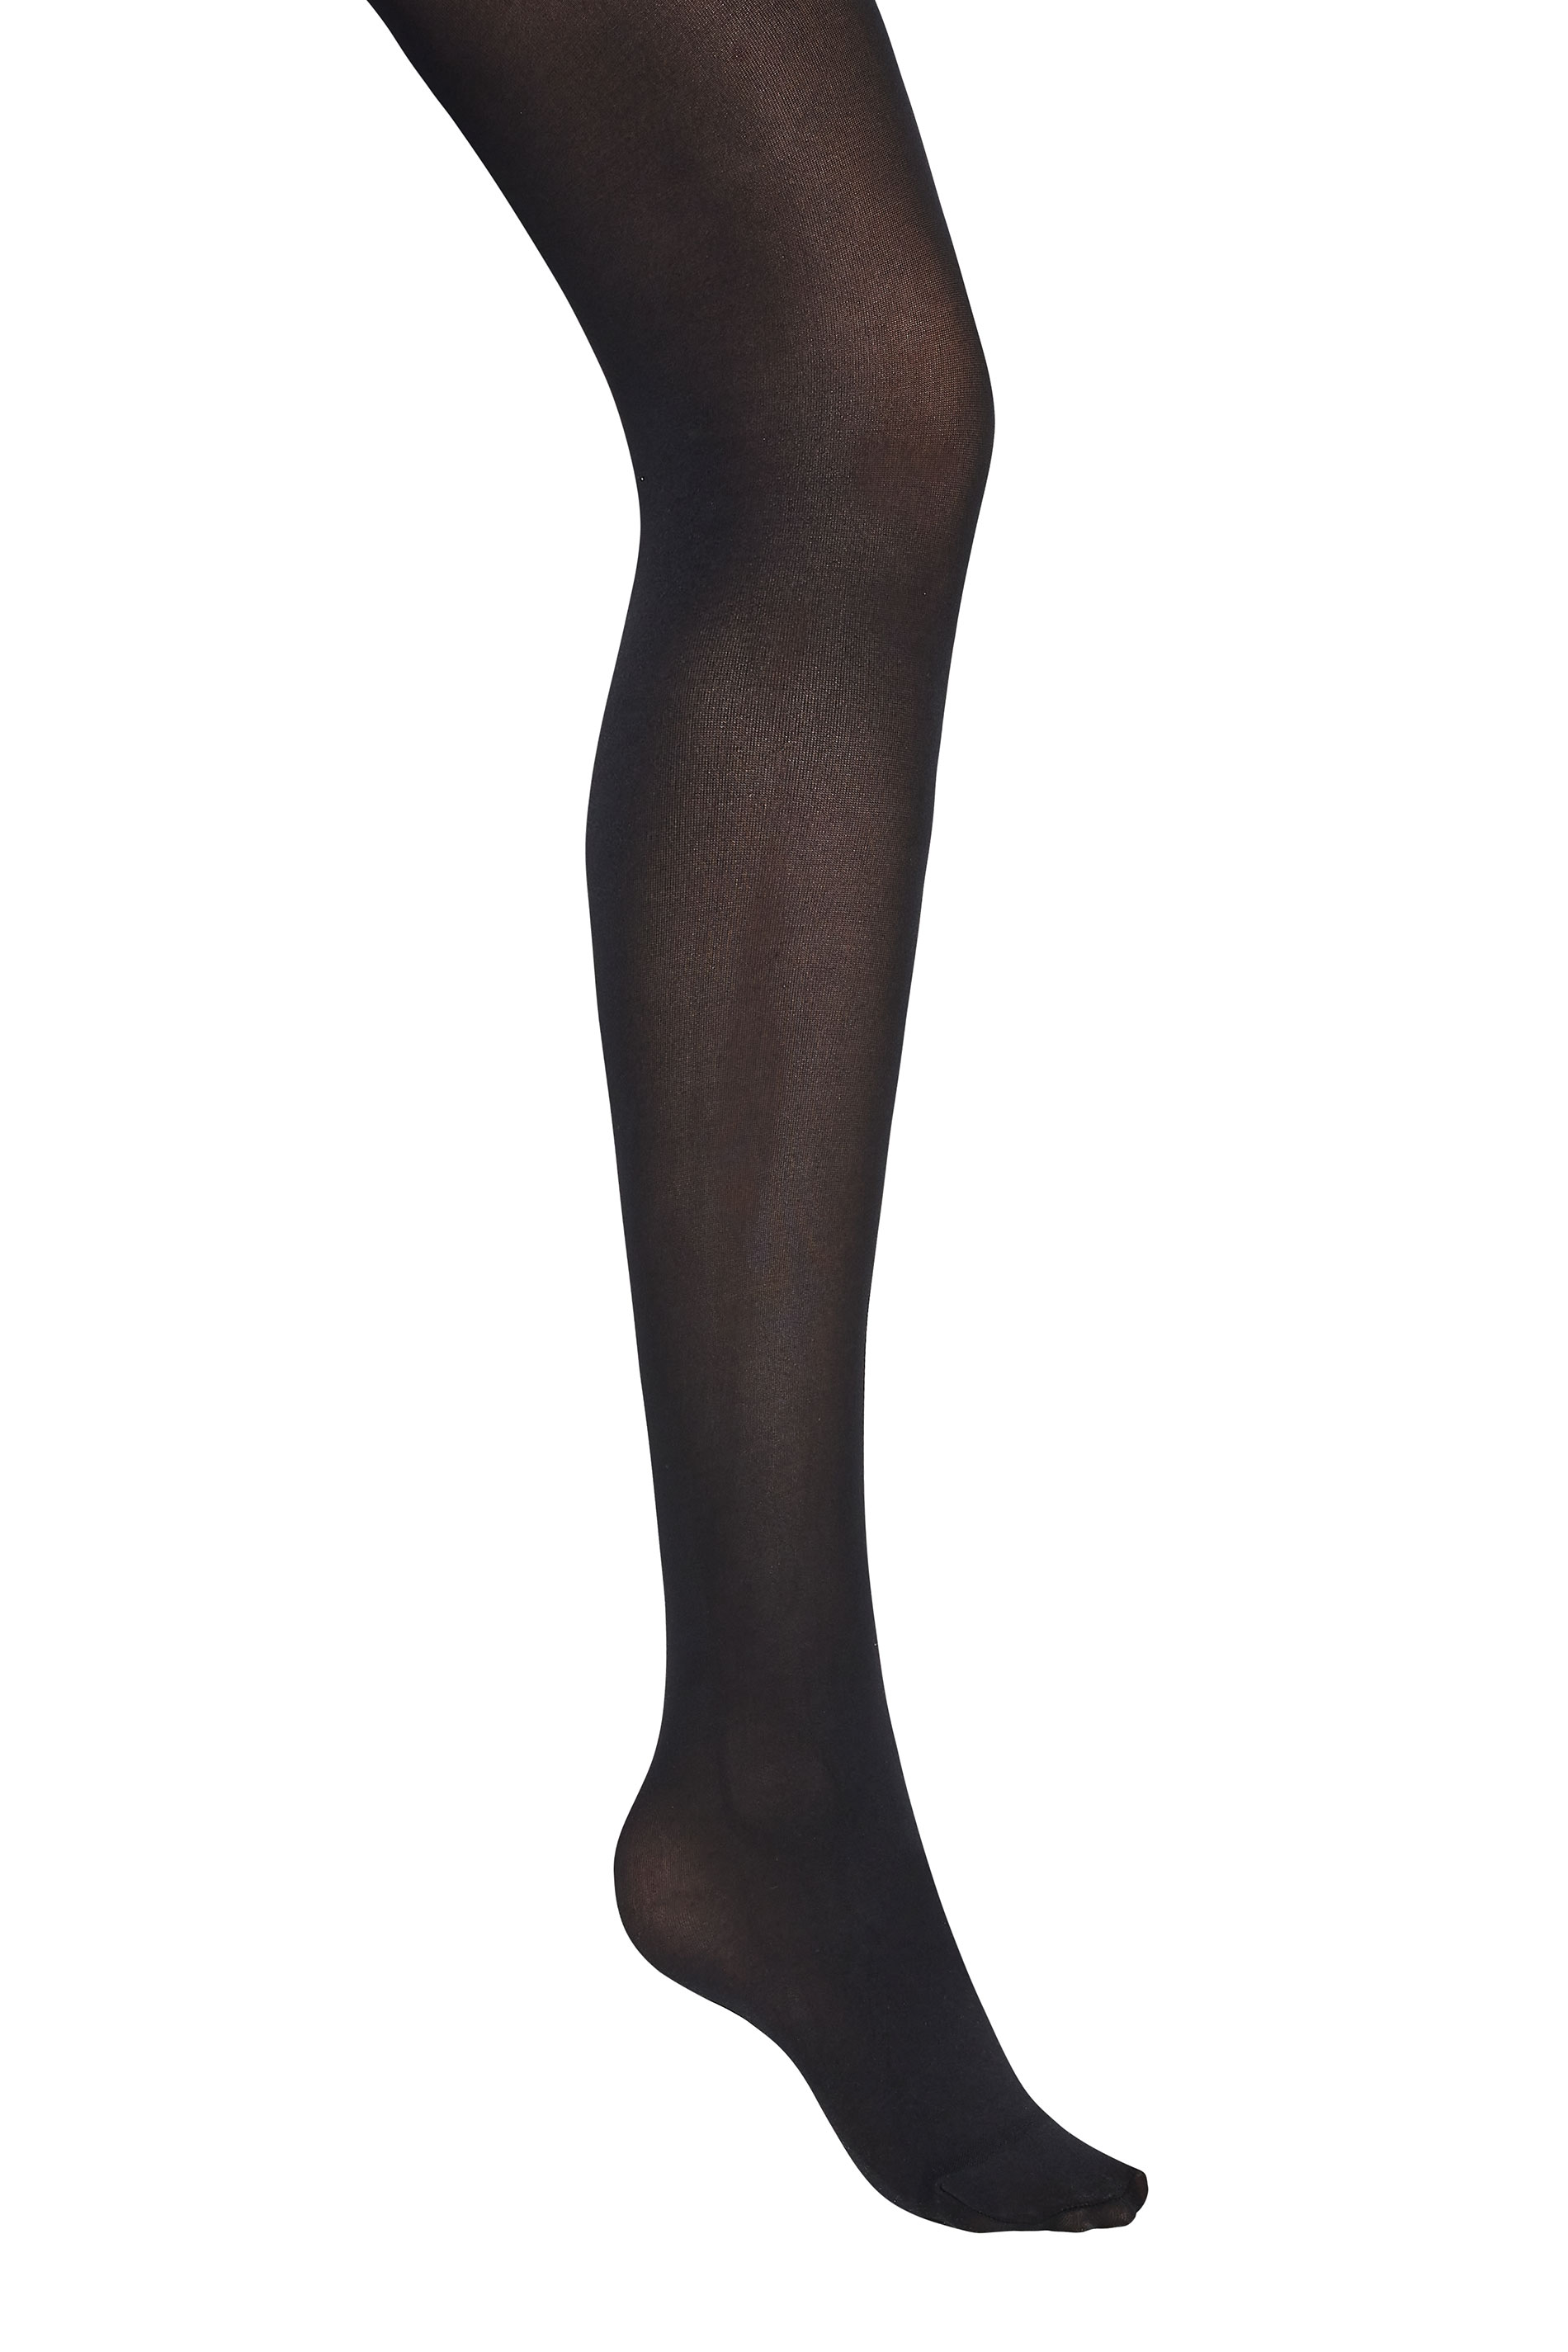 Tall Women's Black 120 Denier Premium Tights | Long Tall Sally  3